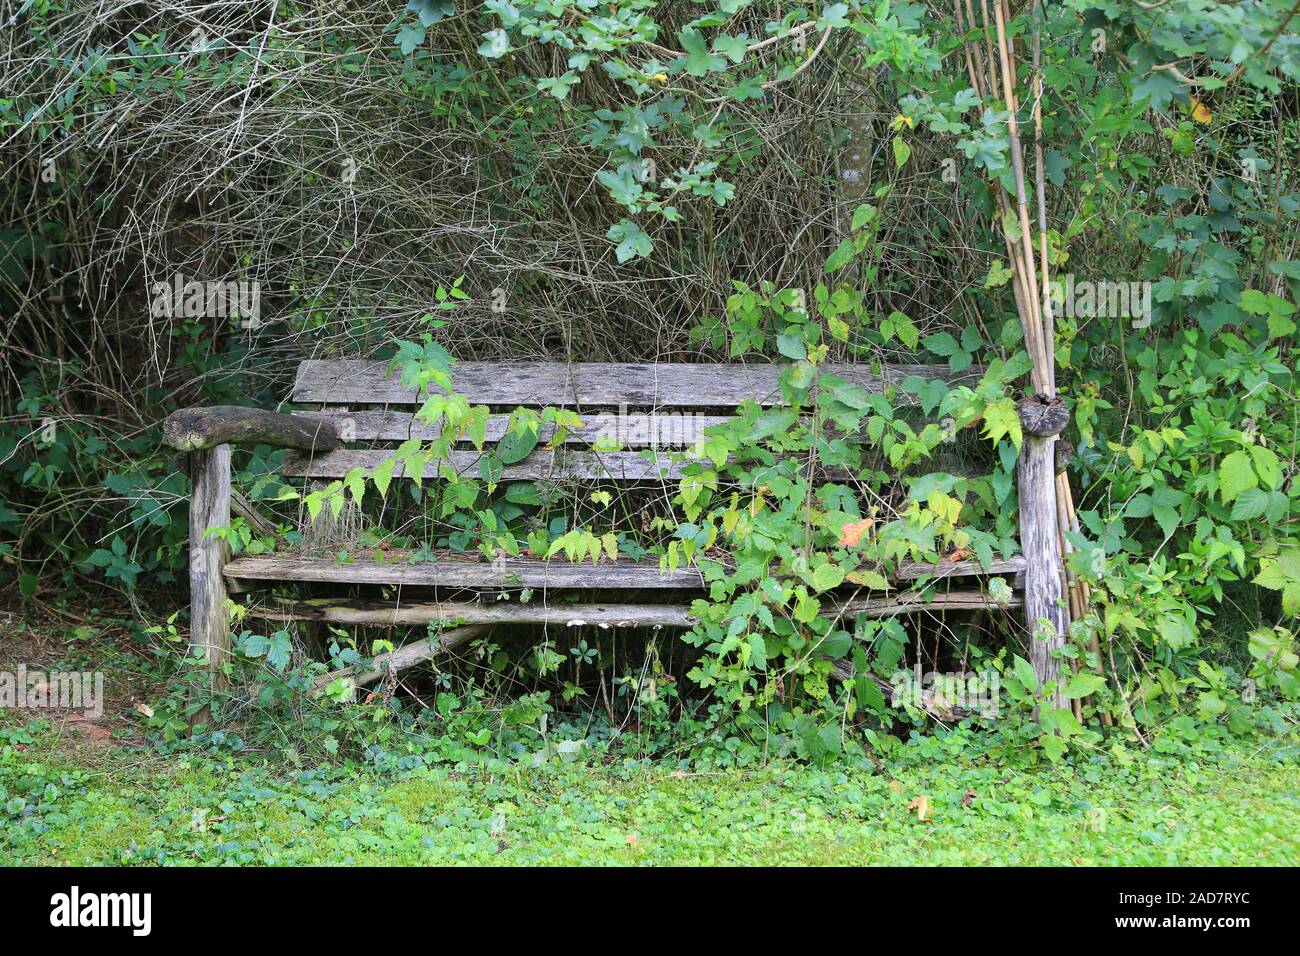 Overgrown garden bench in the park Stock Photo